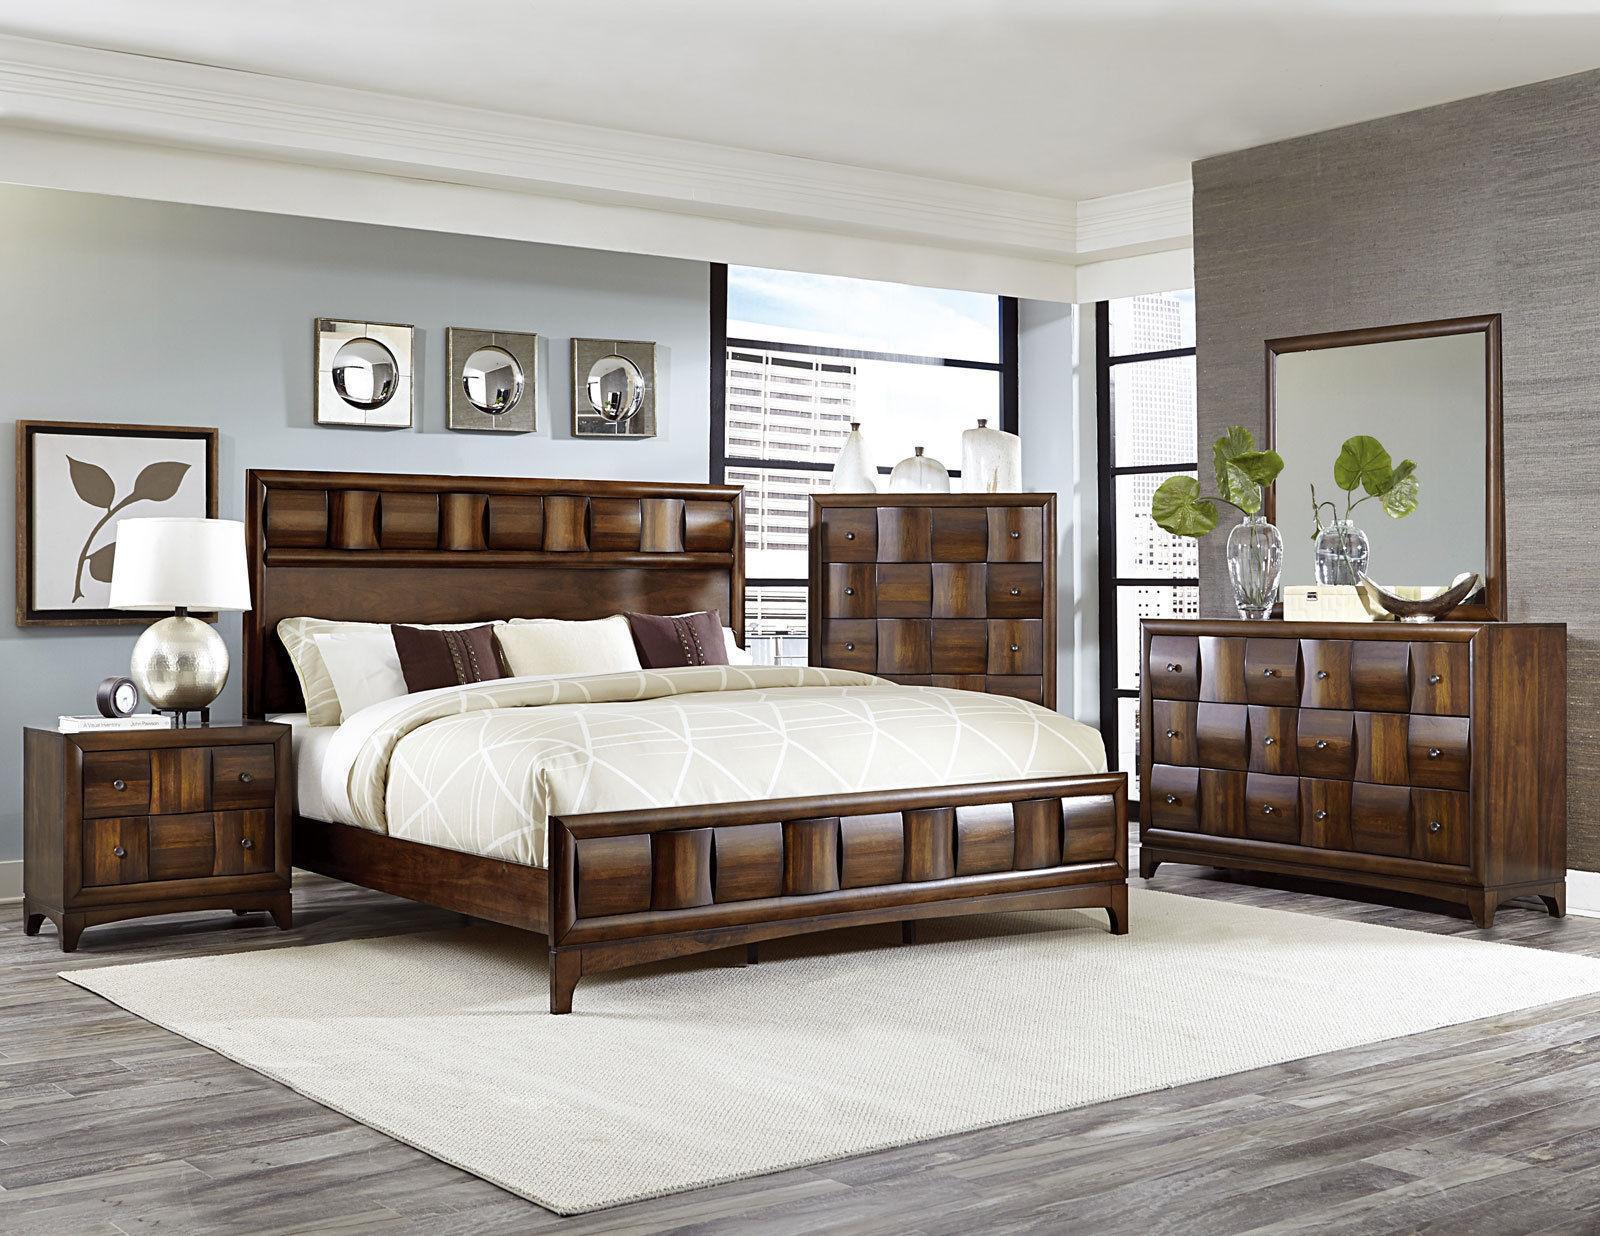 mode walnut bedroom furniture